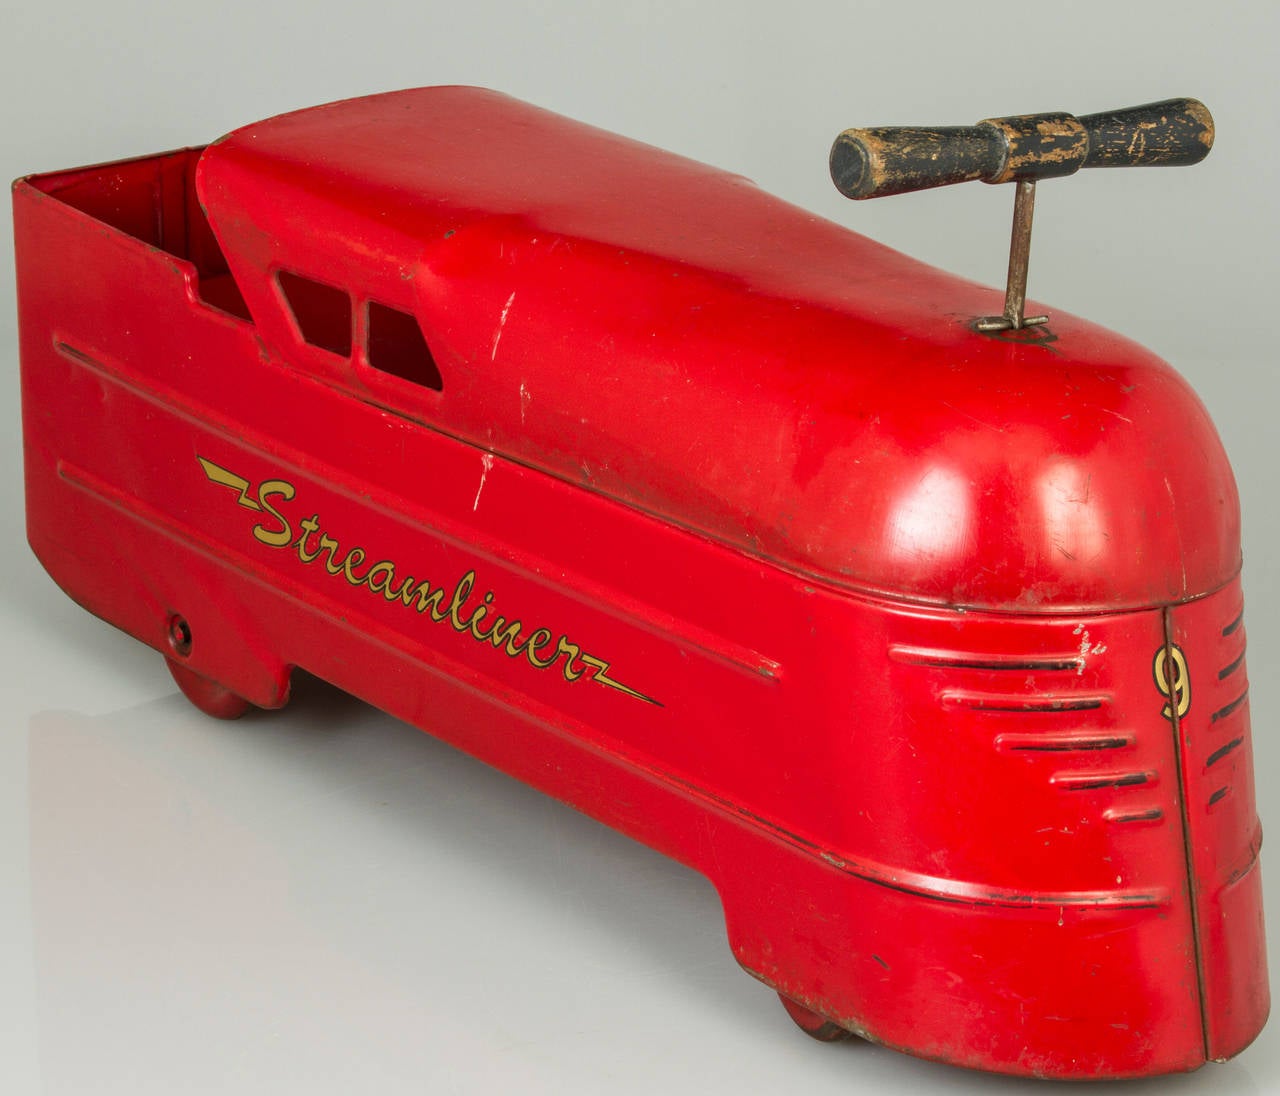 Art Deco Modernist Streamliner Ride on Locomotive Toy, 1937 by Marx 3